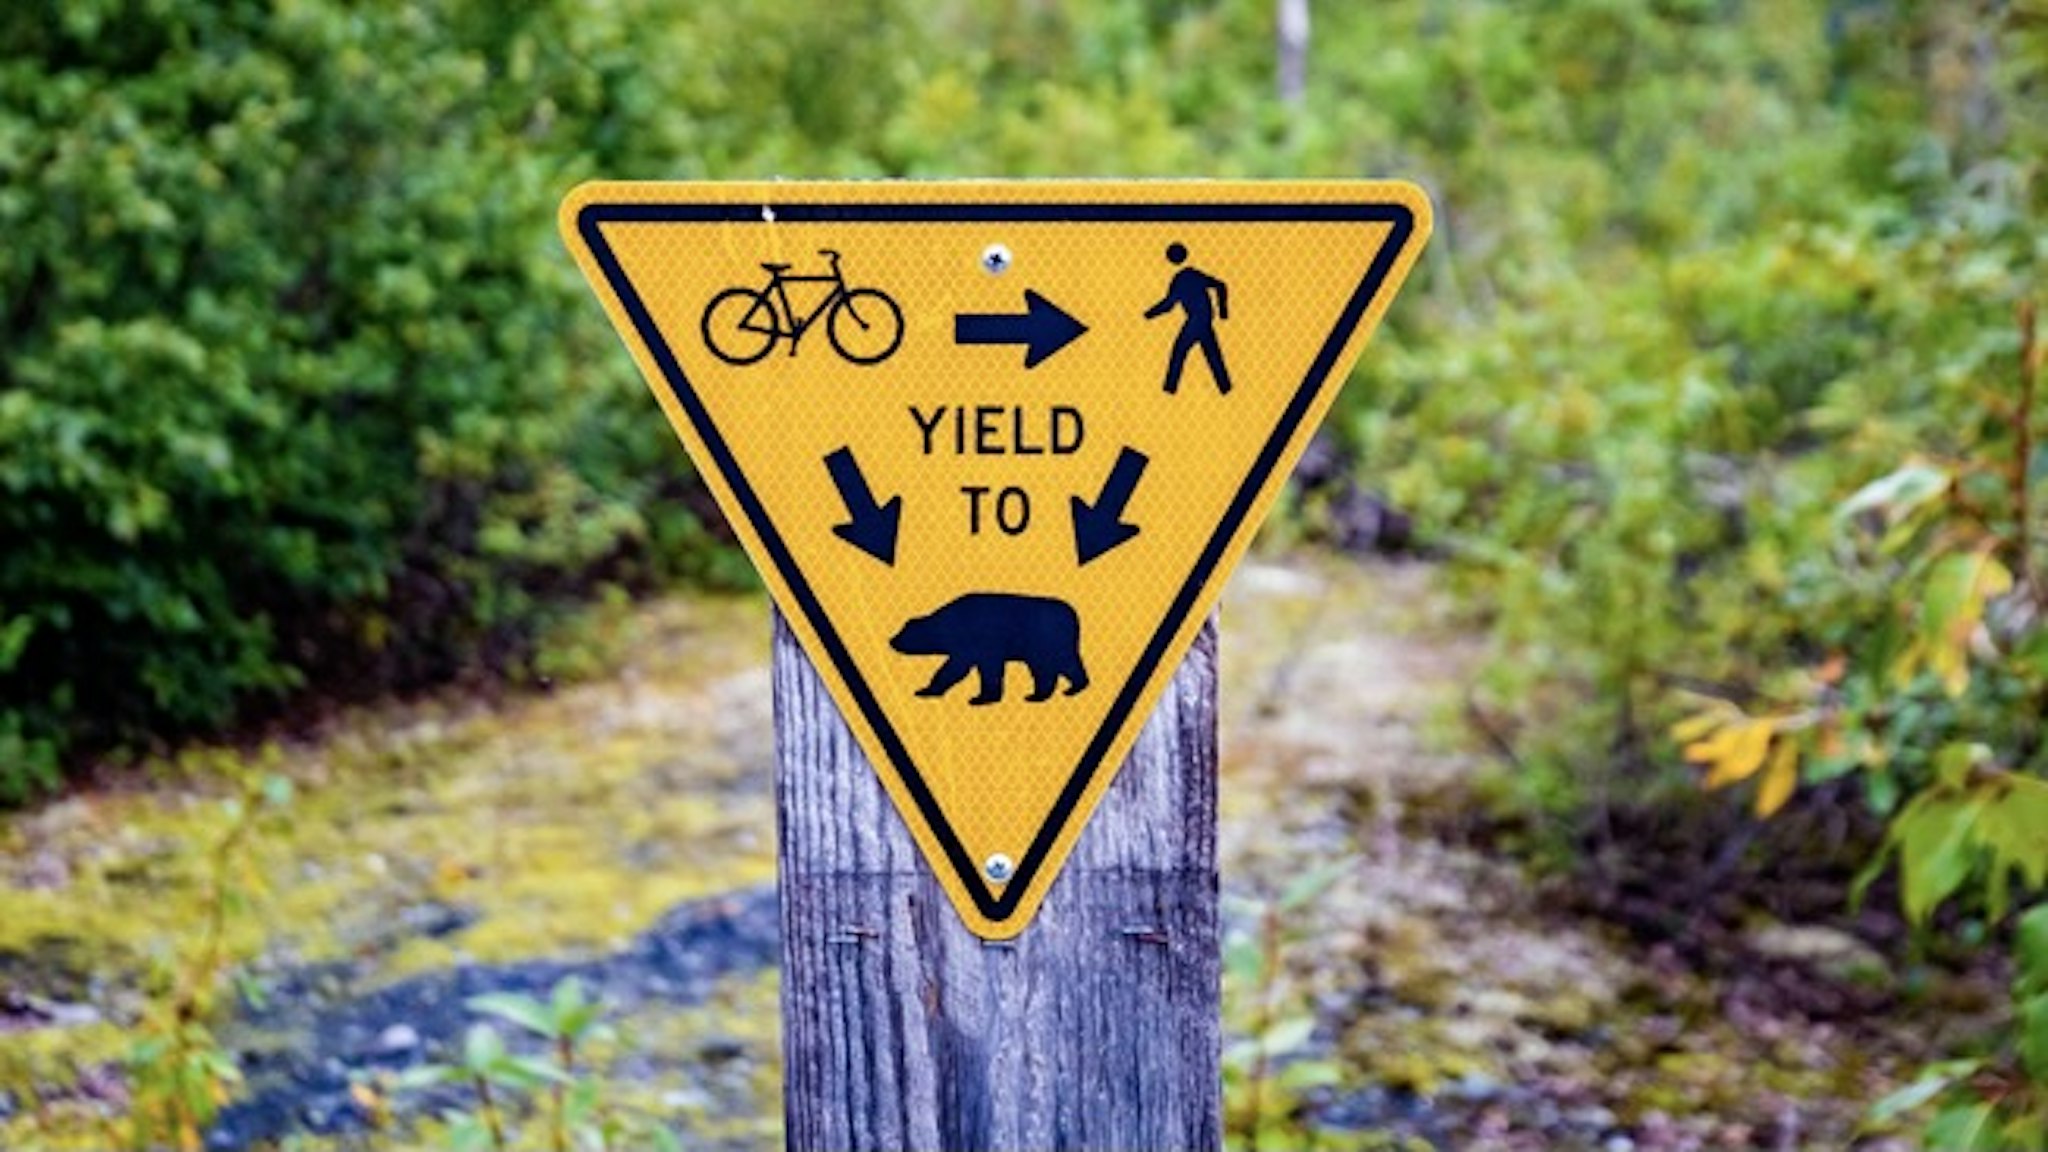 Fun yield to bears sign warning on trail - stock photo Fun yield to bears sign warning on trail in Alaska GummyBone via Getty Images